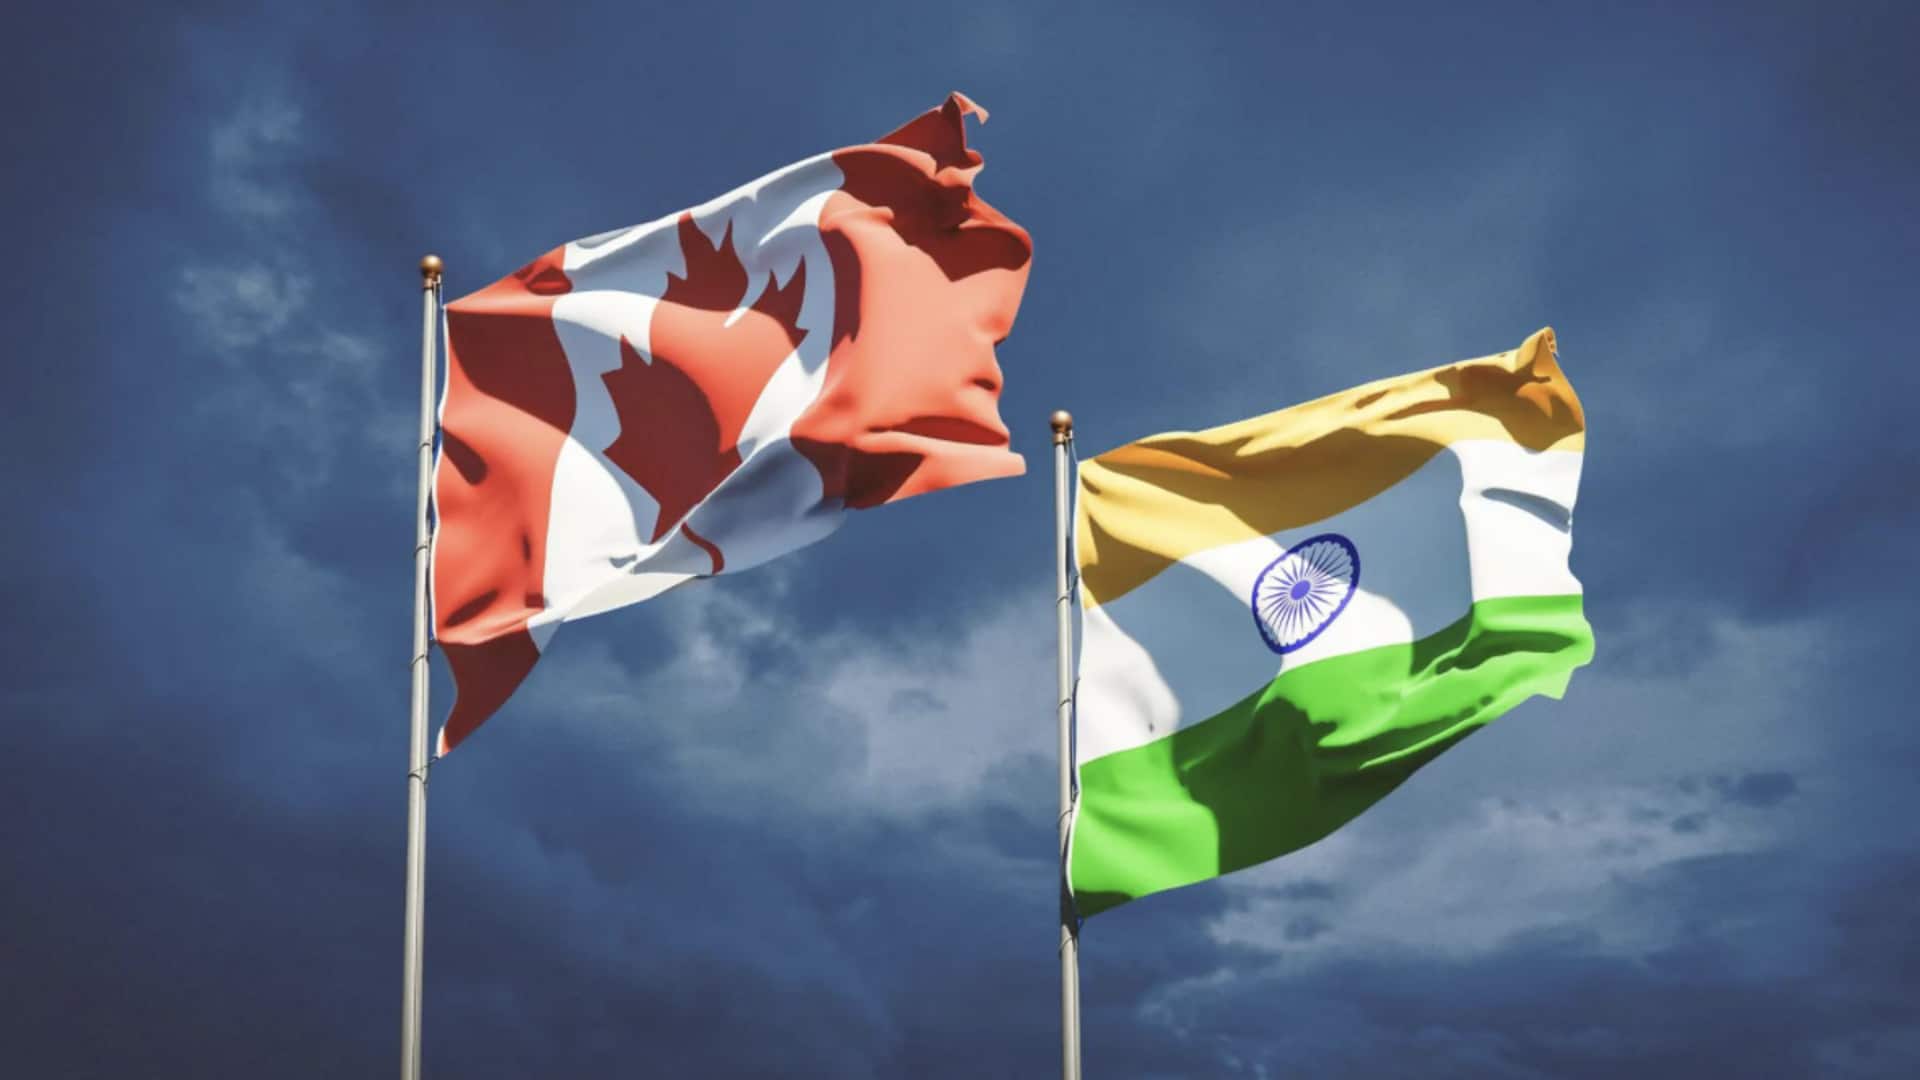 Canada: Hindu community to hold public forum amid extortion threats